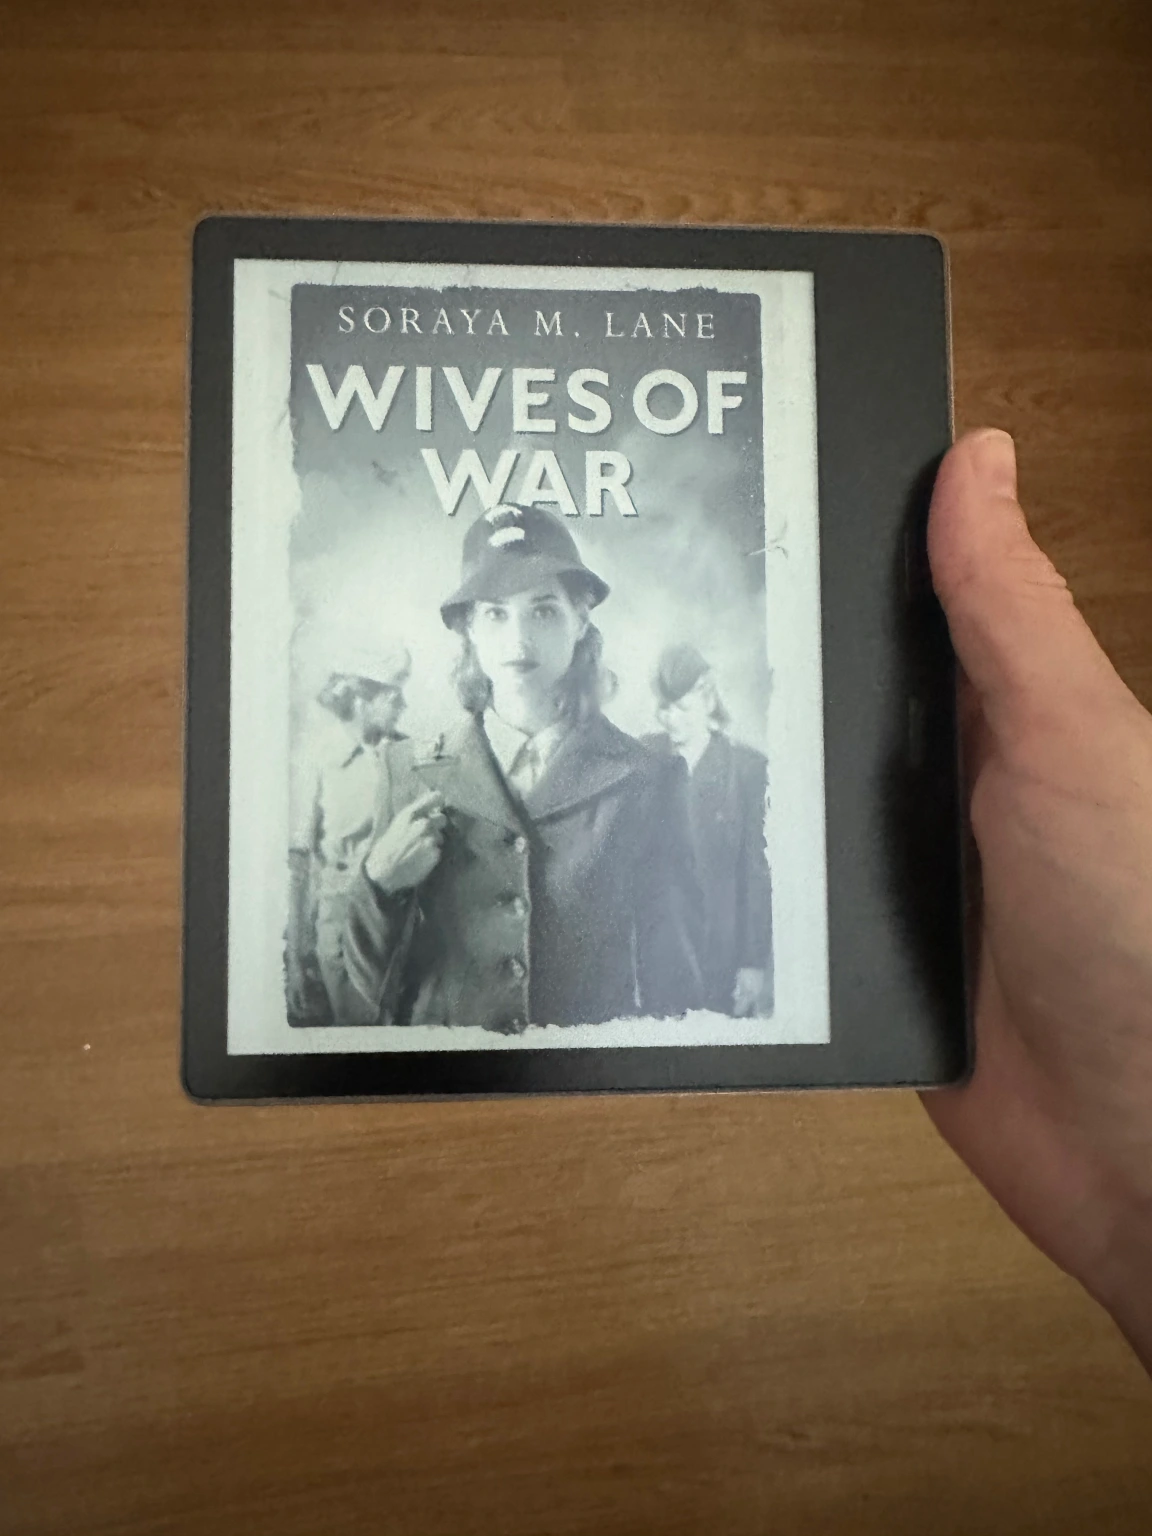 Wives of War by Soraya M. Lane